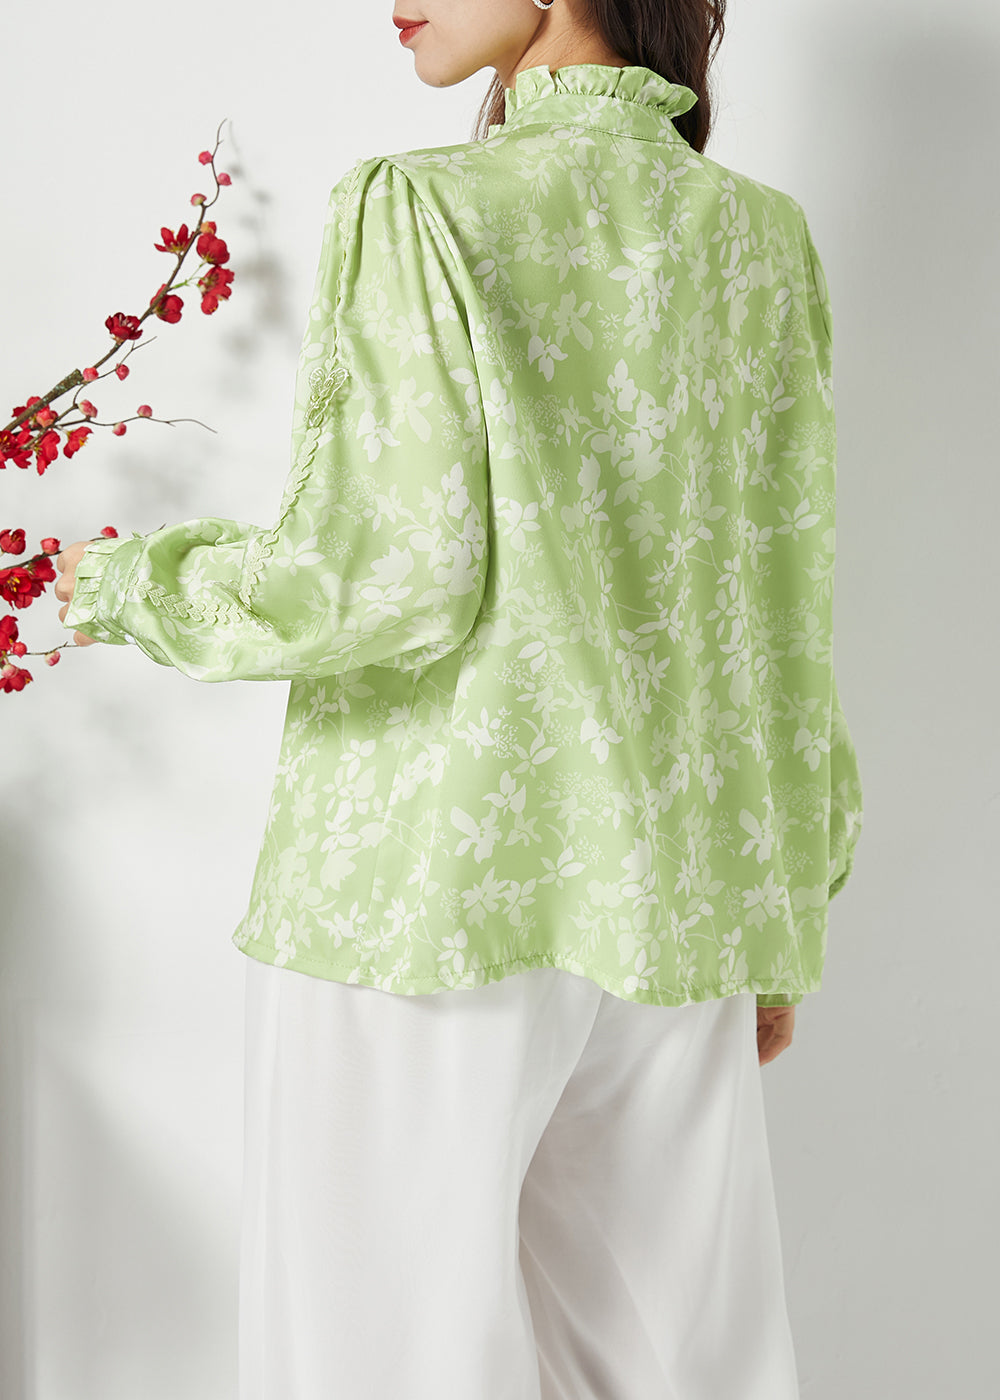 Bohemian Green Ruffled Print Butterfly Silk Tops Spring LY1119 - fabuloryshop